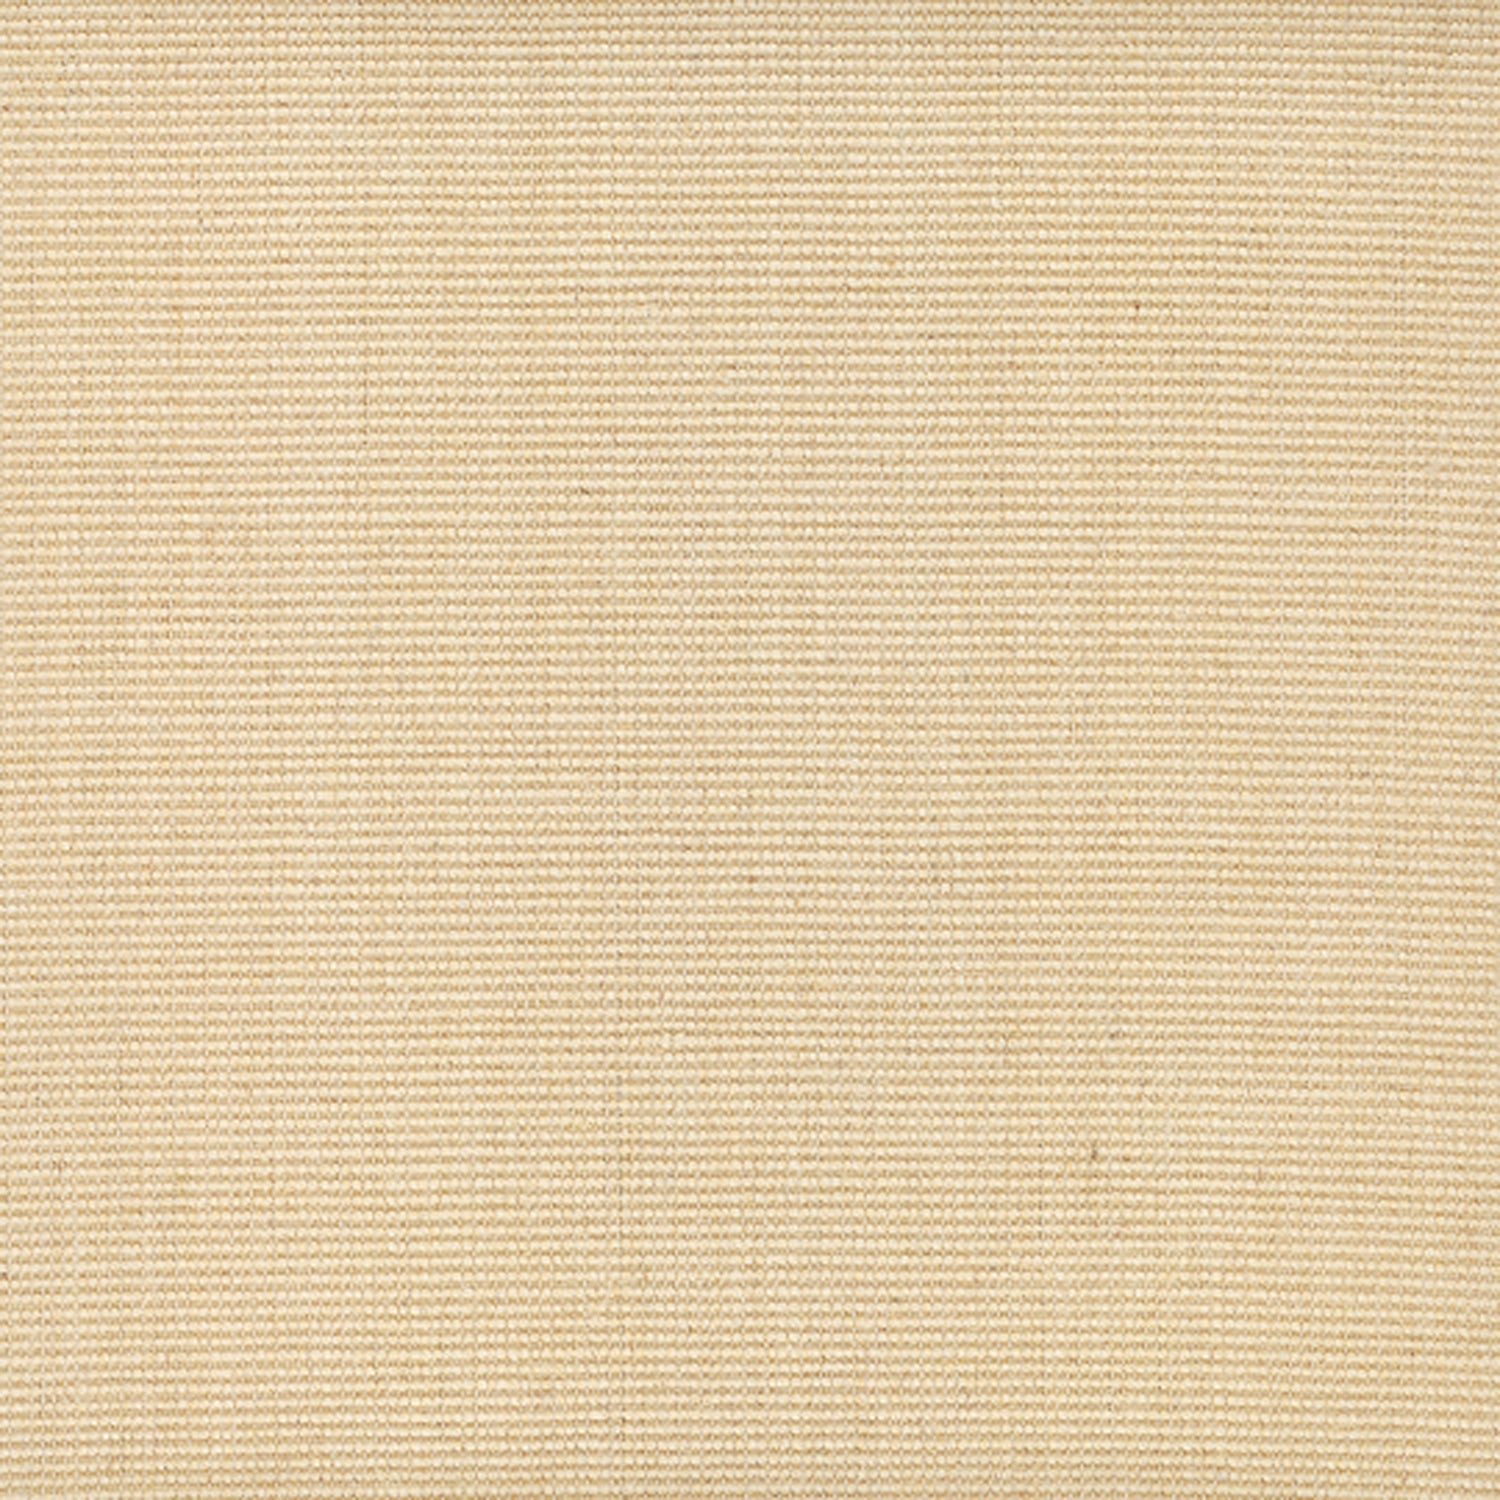 Sisal broadloom carpet swatch in a ribbed weave in "Alabaster" beige.